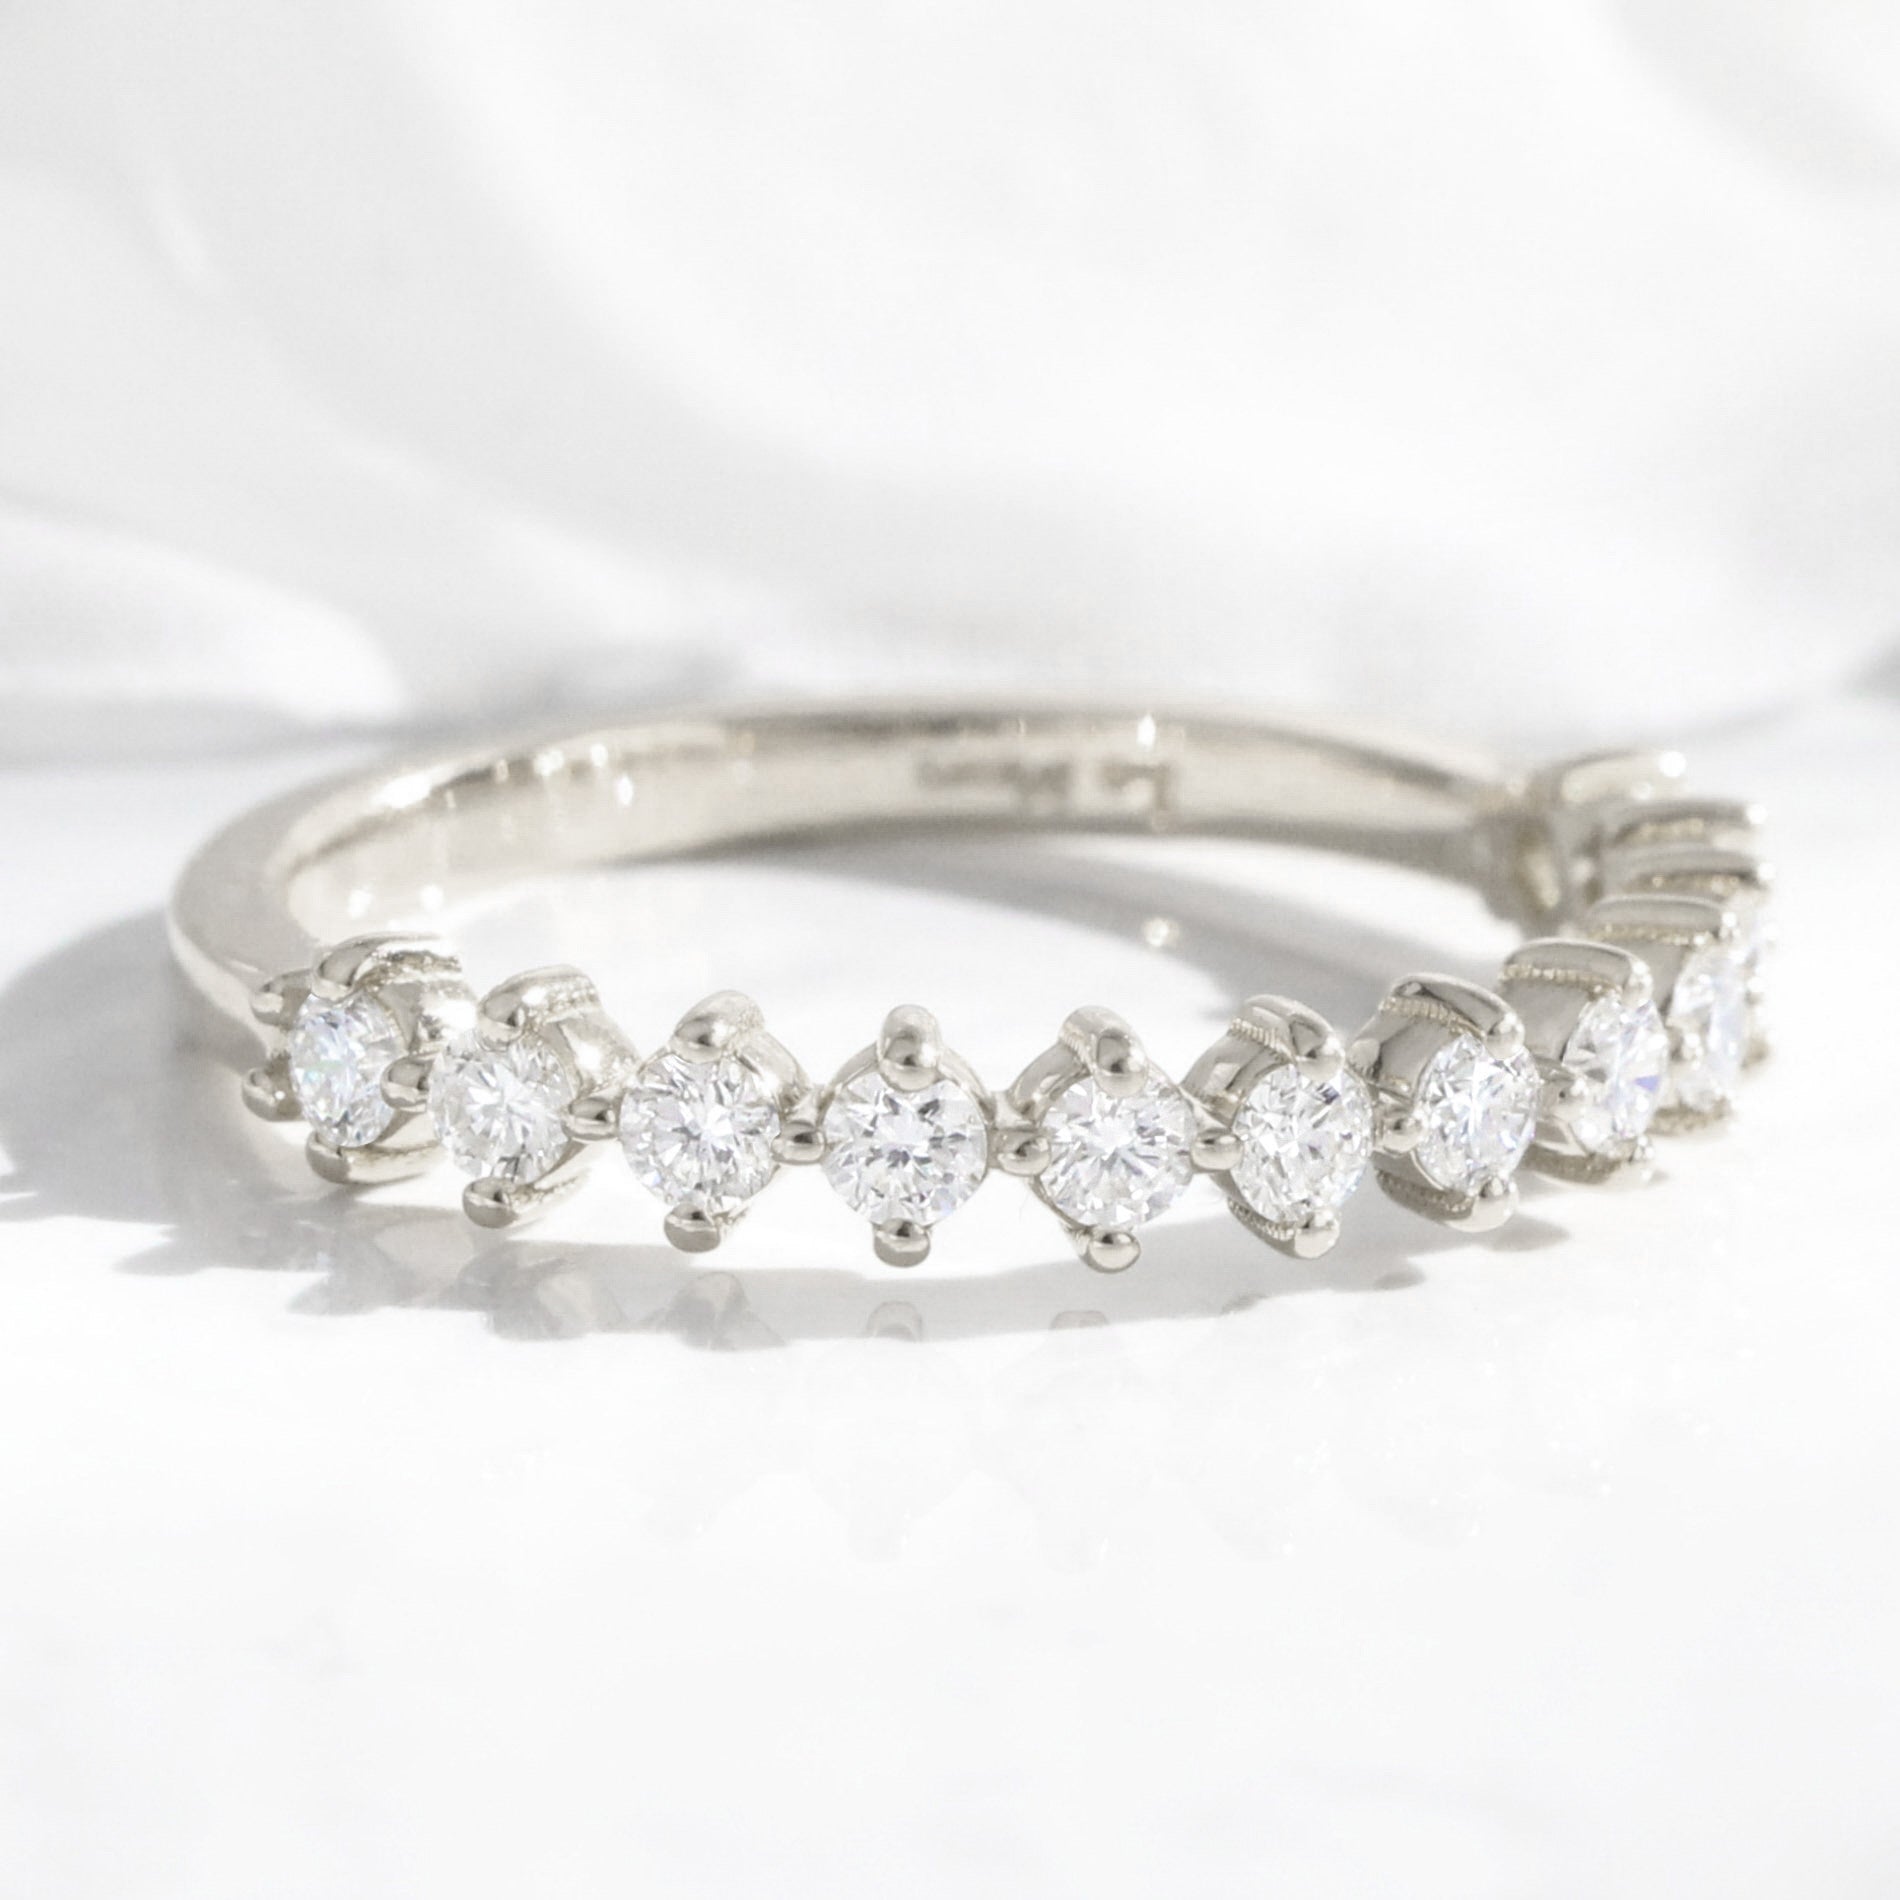 Large diamond wedding ring white gold 4 prong half eternity band la more design jewelry